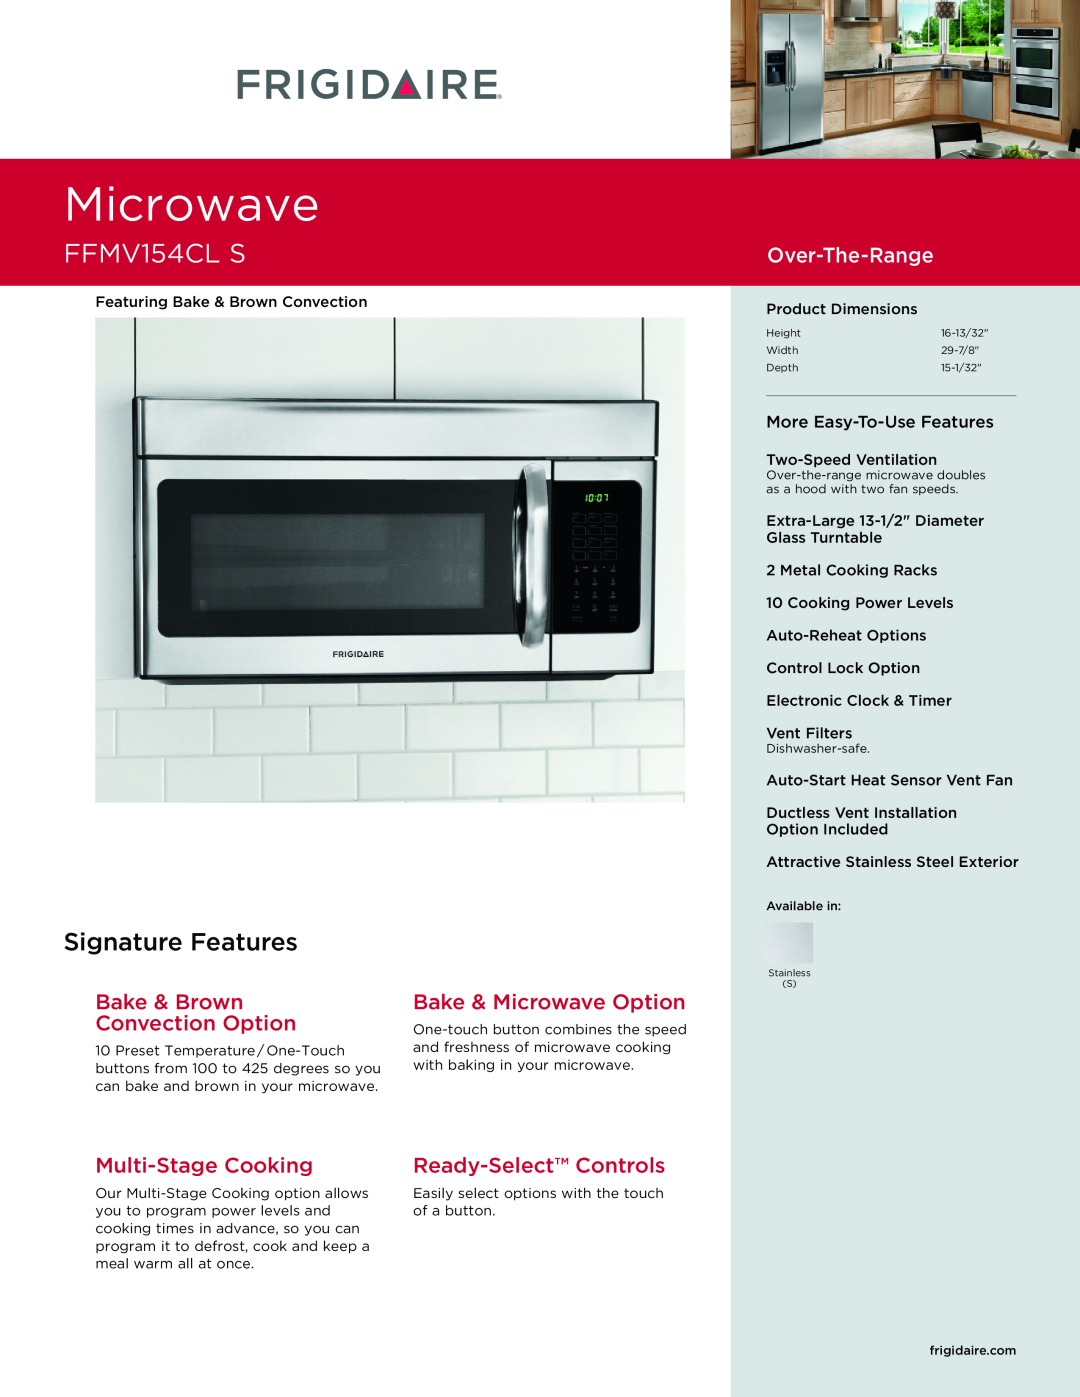 Frigidaire FFMV154CLS dimensions MicrowaveDrop-InCooktop, FFMV154CLPEC3085K S, Signature Features, Bake & Microwave Option 